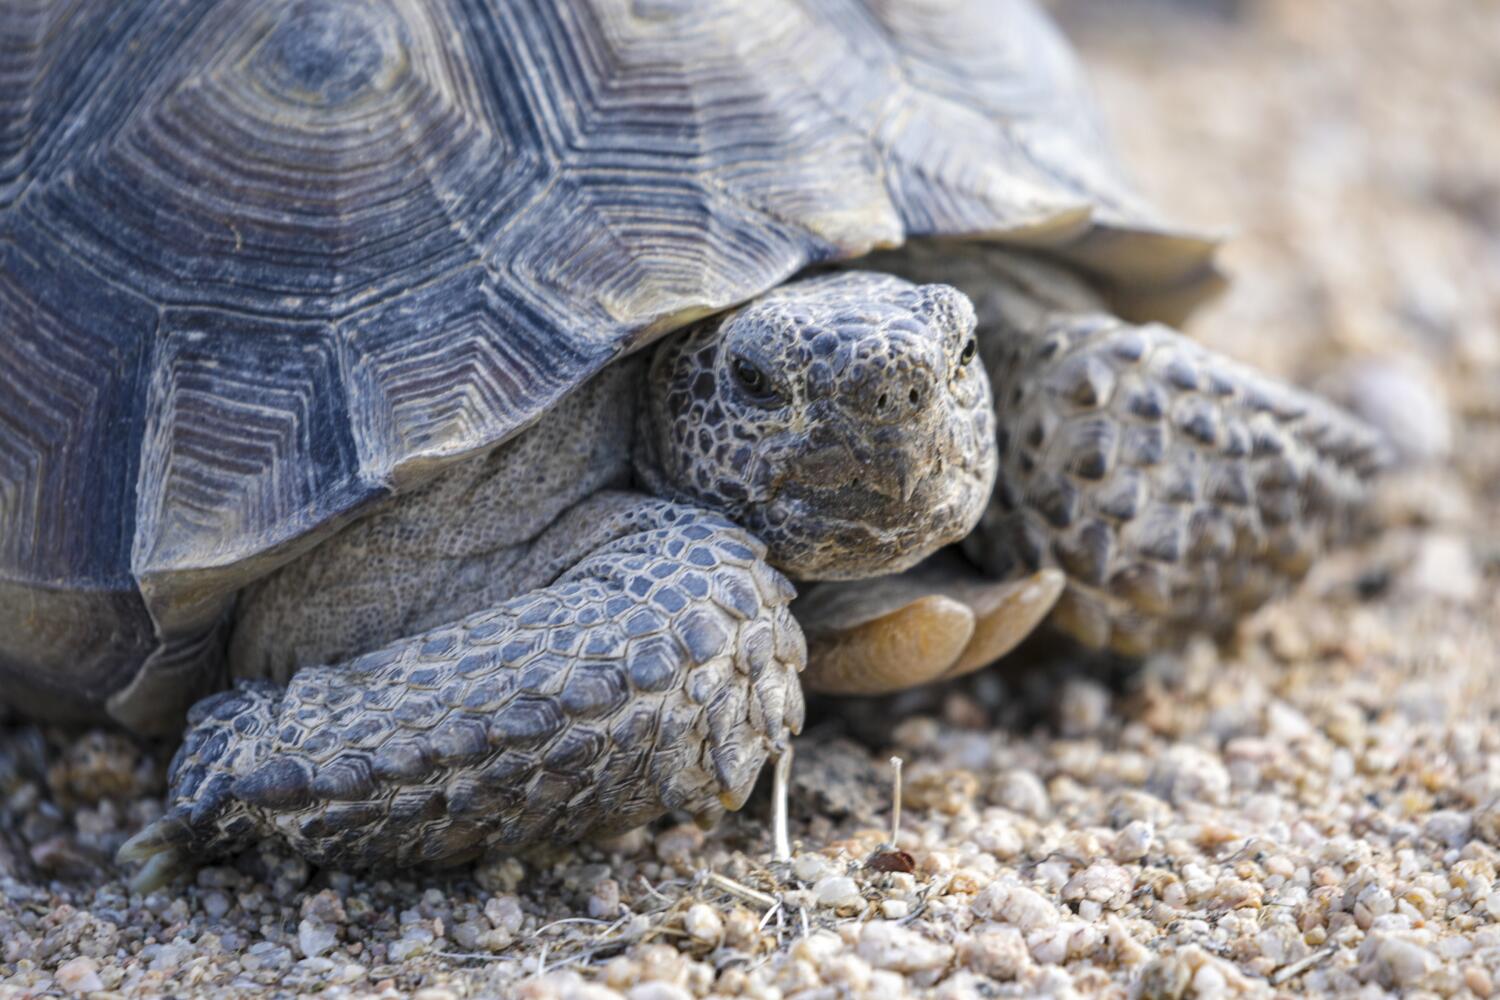 Good news for desert tortoises: Stretch of Mojave Desert gets federal protections